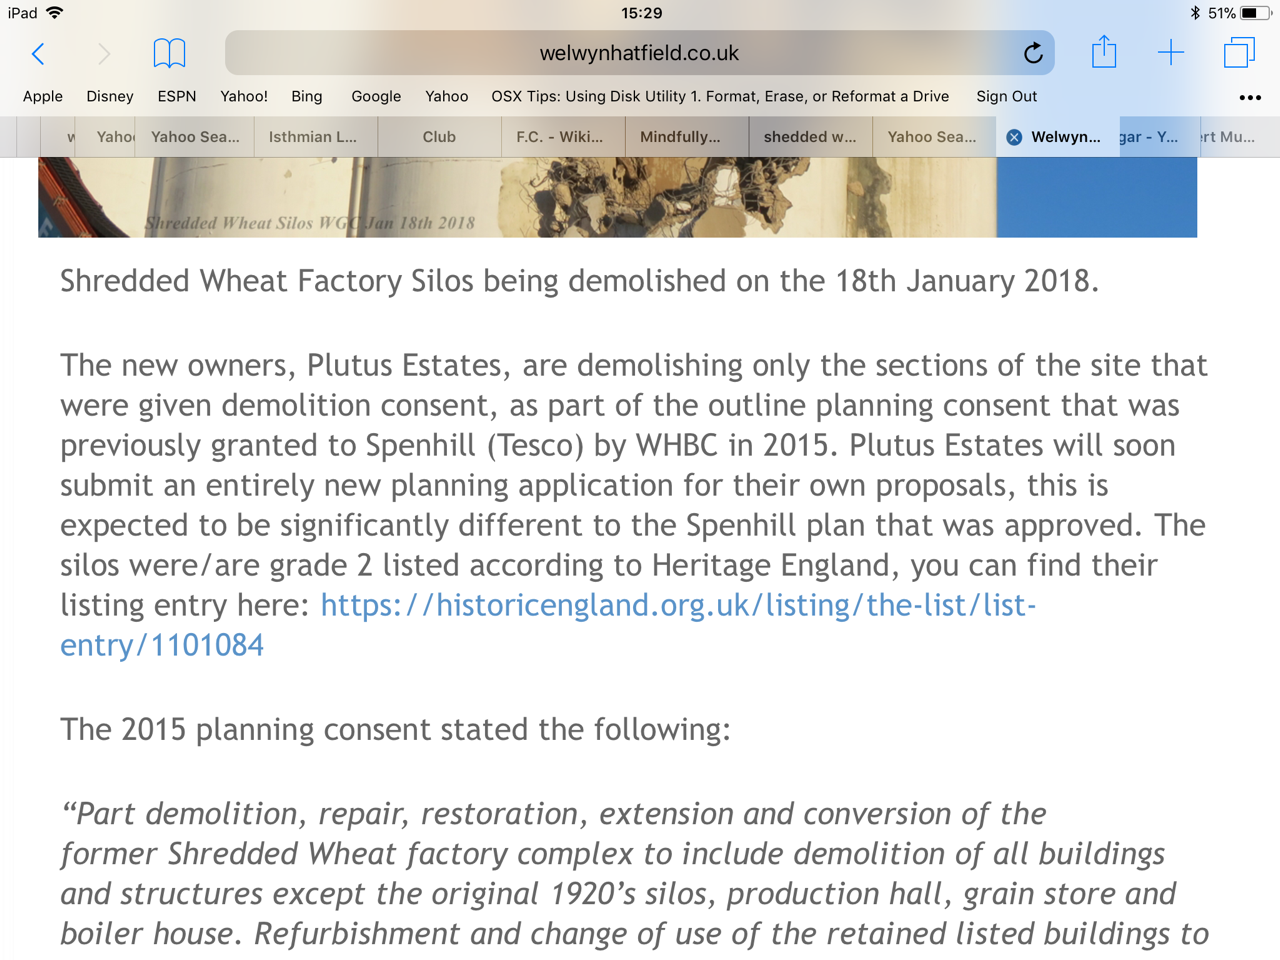 Shredded Wheat: A statement by Welwyn and Hatfield.